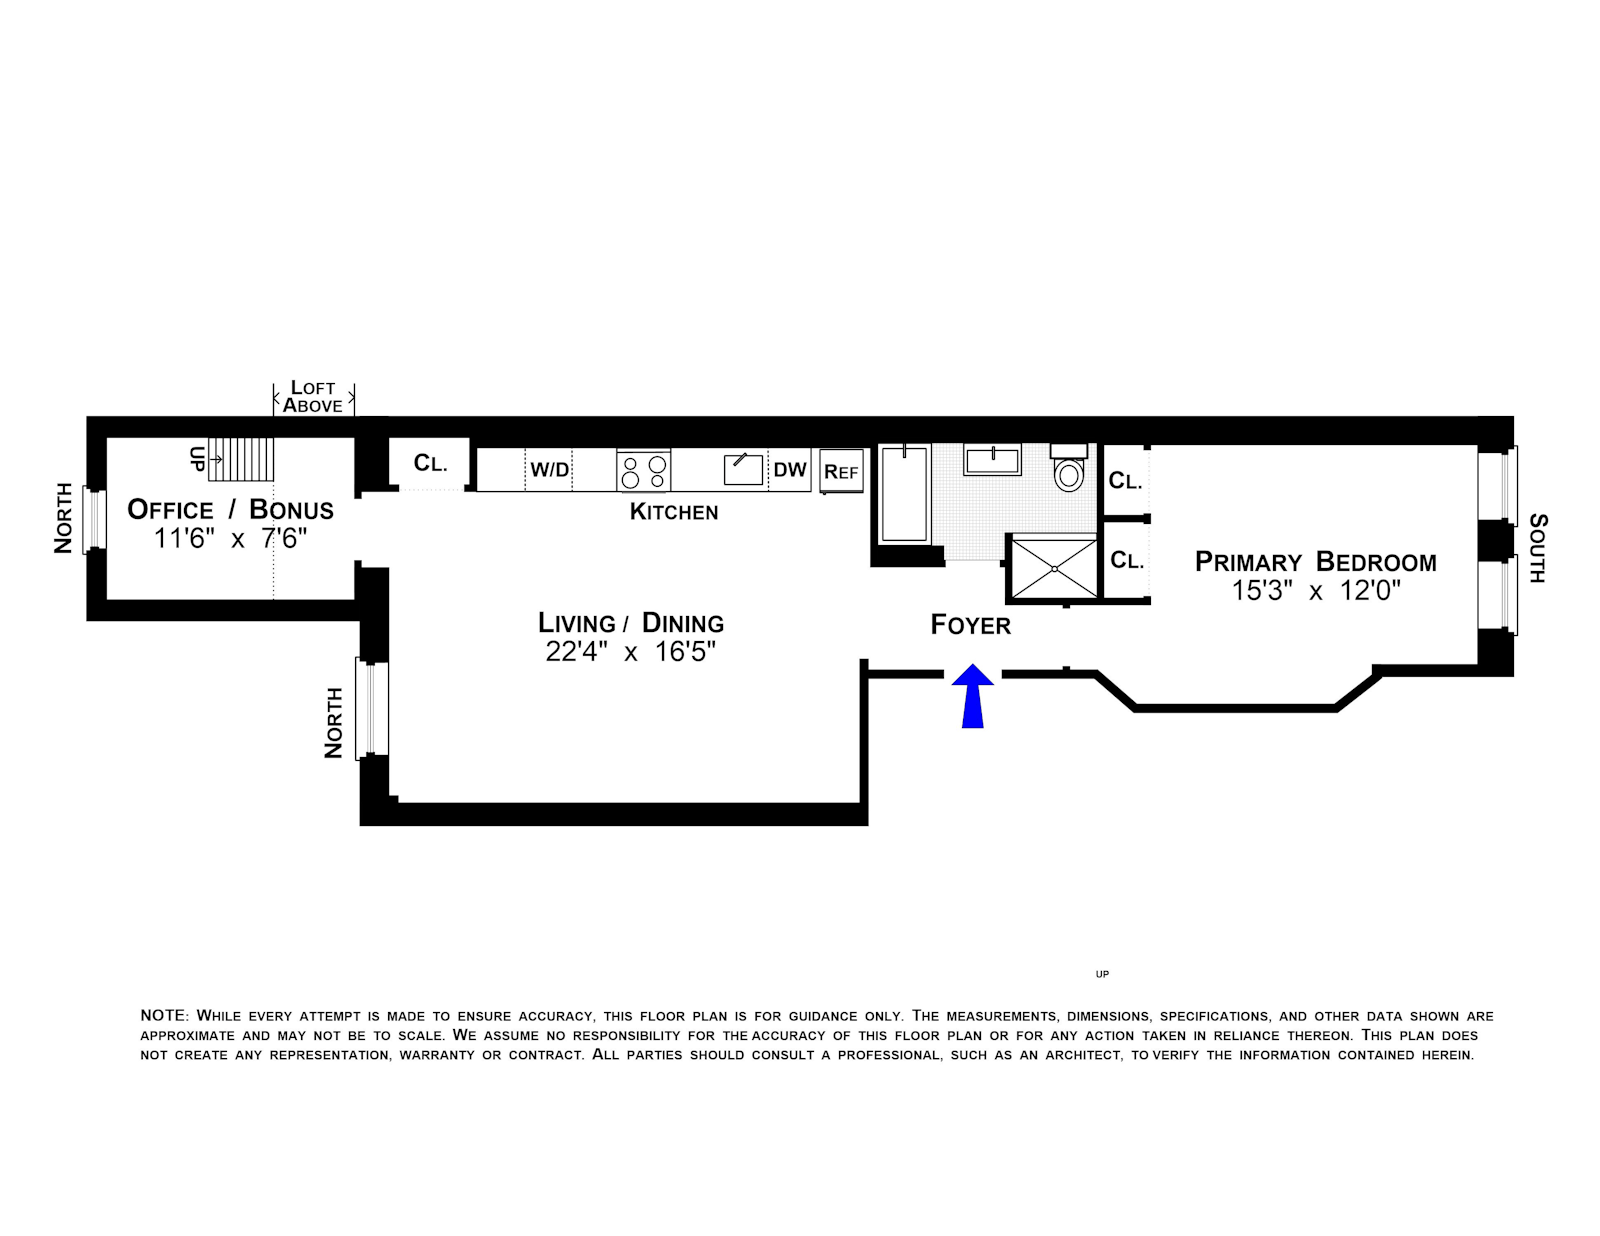 Floorplan for 167 West 87th Street, 2